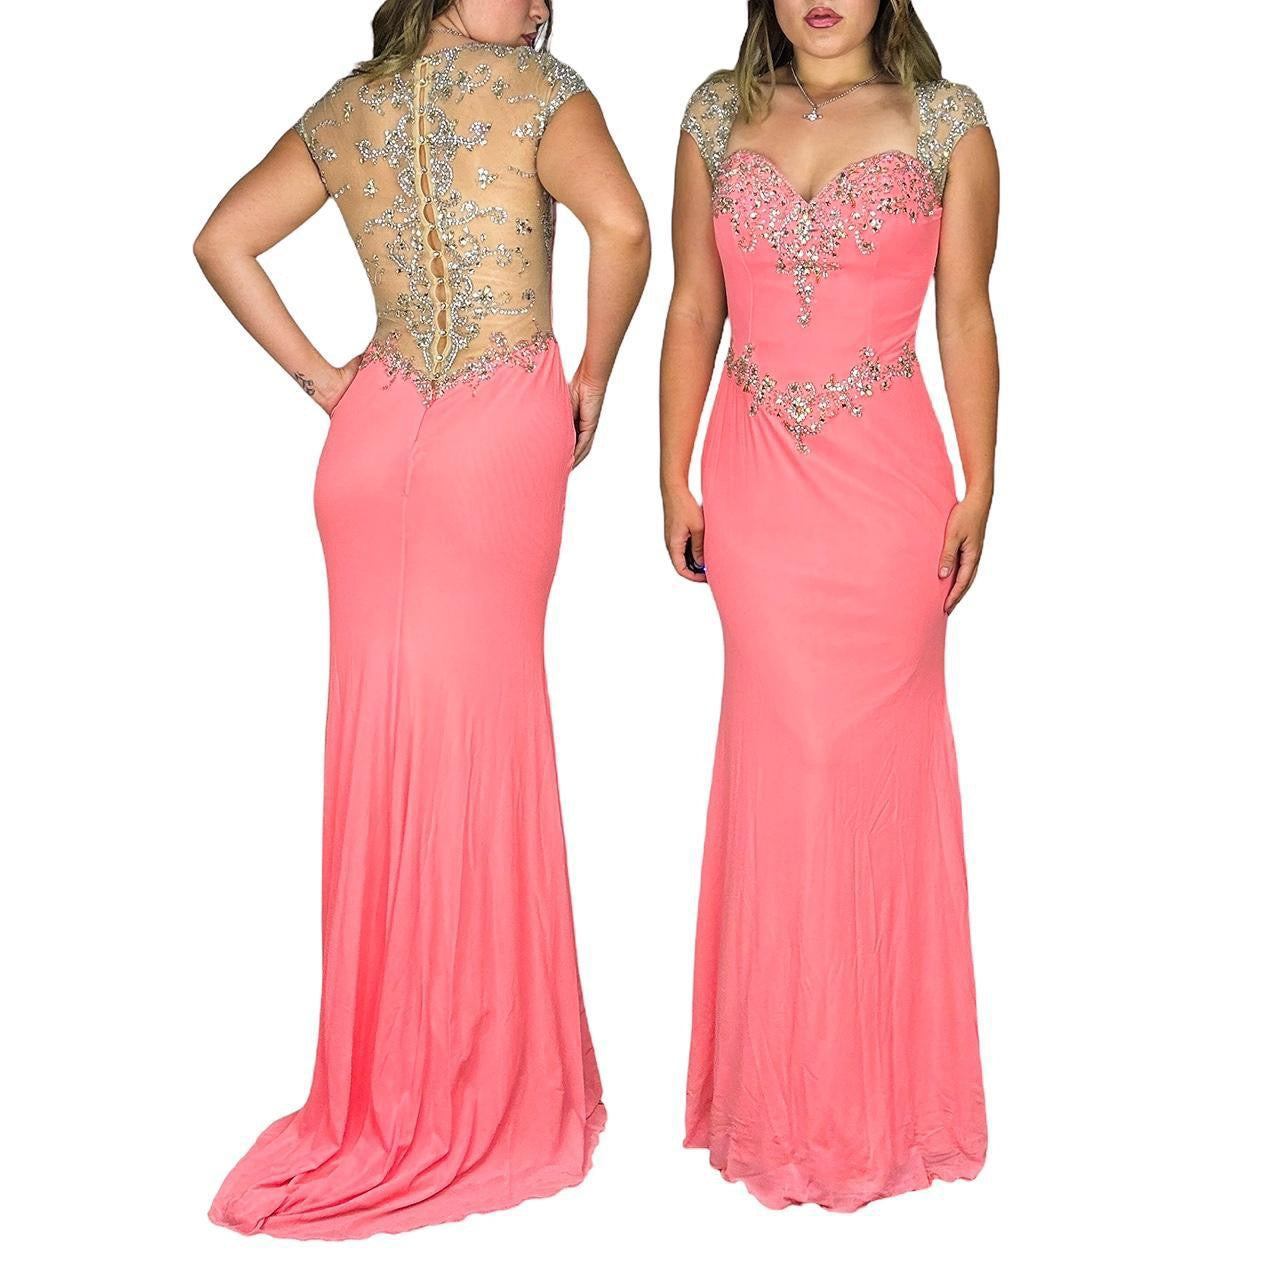 Y2K Bejeweled Mesh Prom Dress (M)